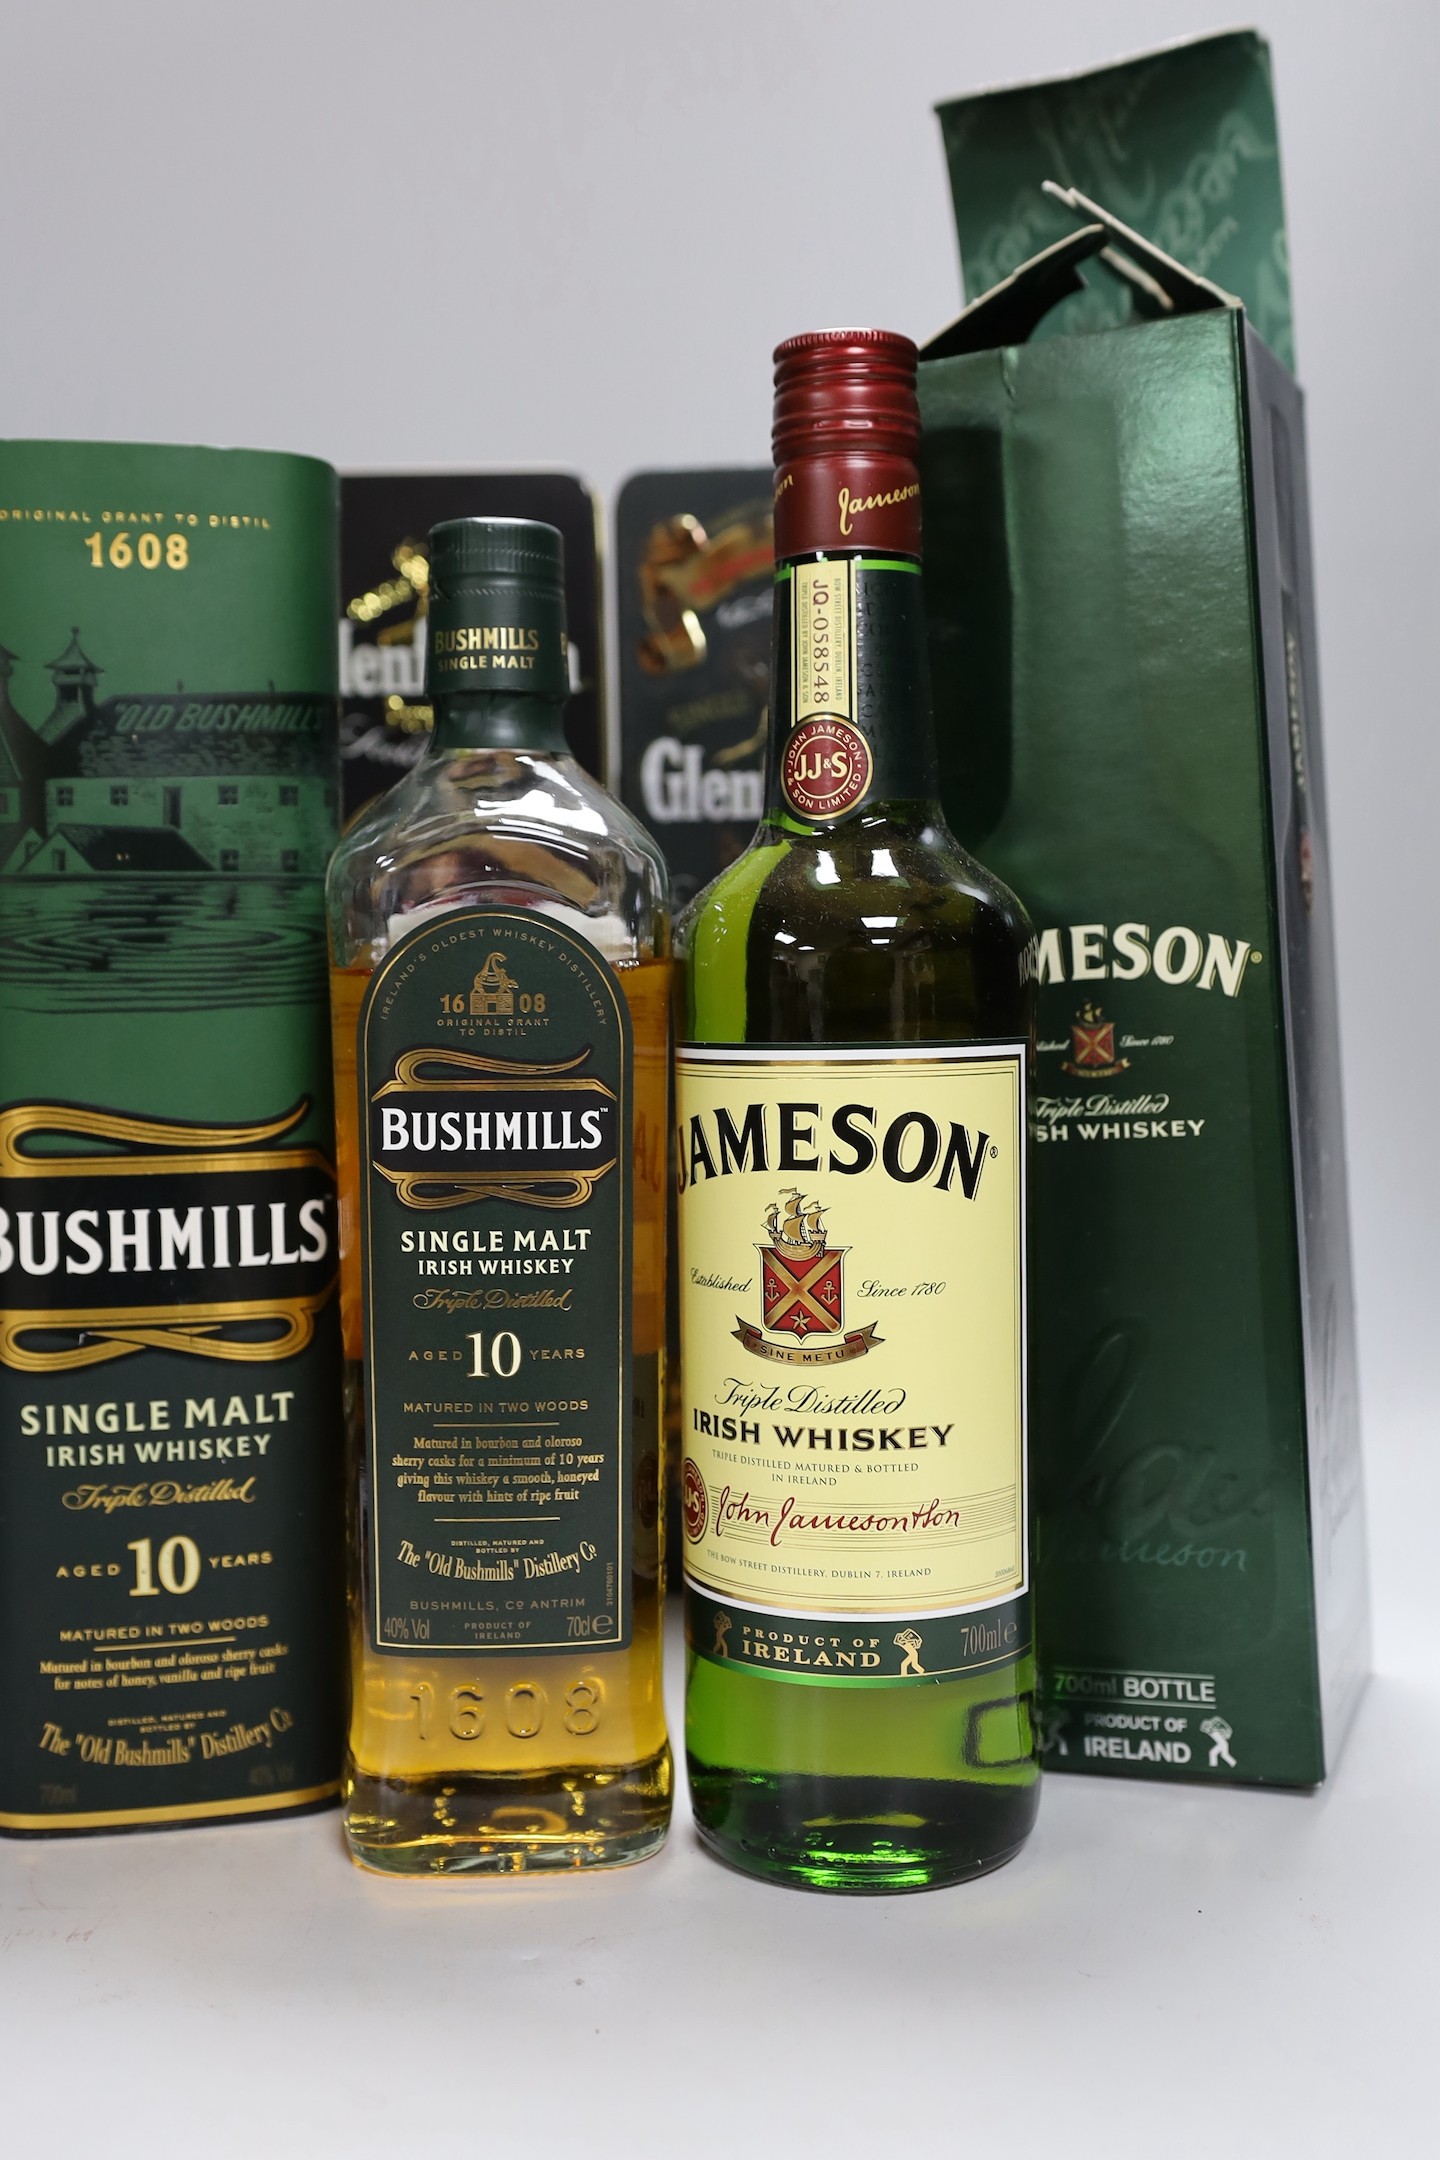 6 bottles of whisky/whiskey and brandy - 2 70cl bottles of Glenfiddich, 1 70cl bottle of Bushmills, a 70cl bottle of Jameson, a 50cl bottle of Black Mountain apple and blackcurrant brandy and a 35cl bottle of Teachers